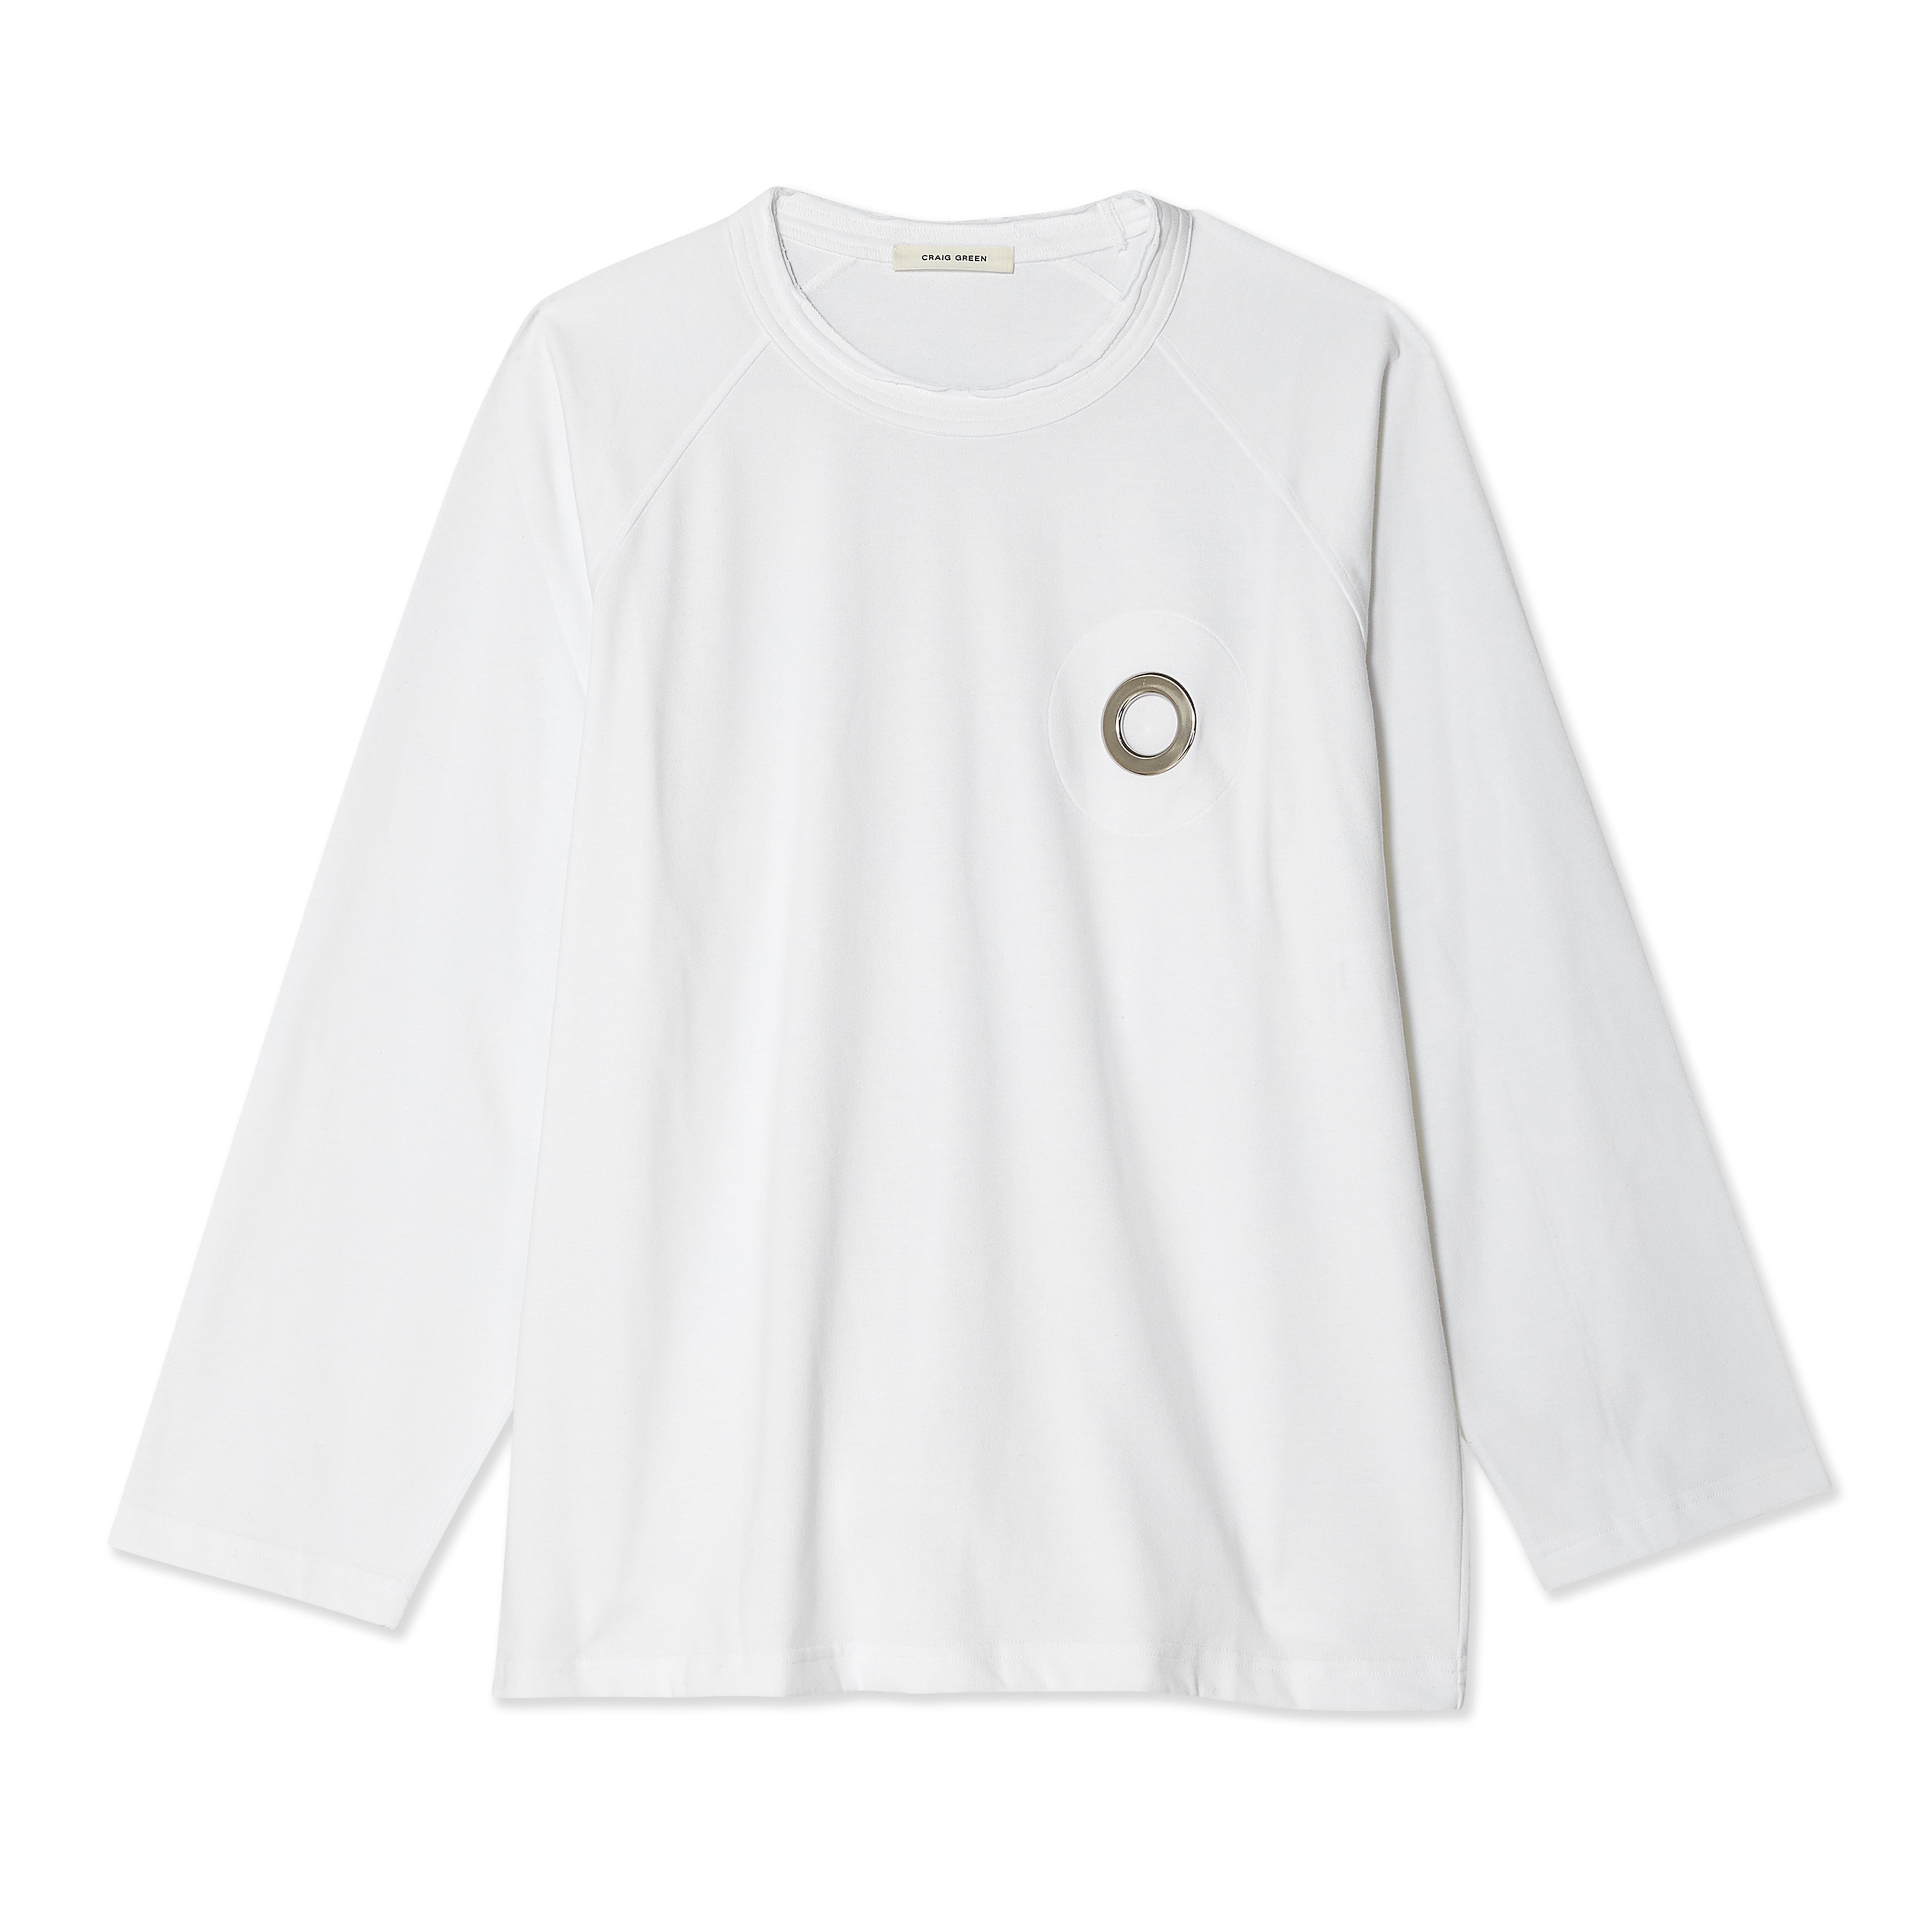 Craig Green - Men’s Eyelet Long Sleeve T-Shirt - (White)